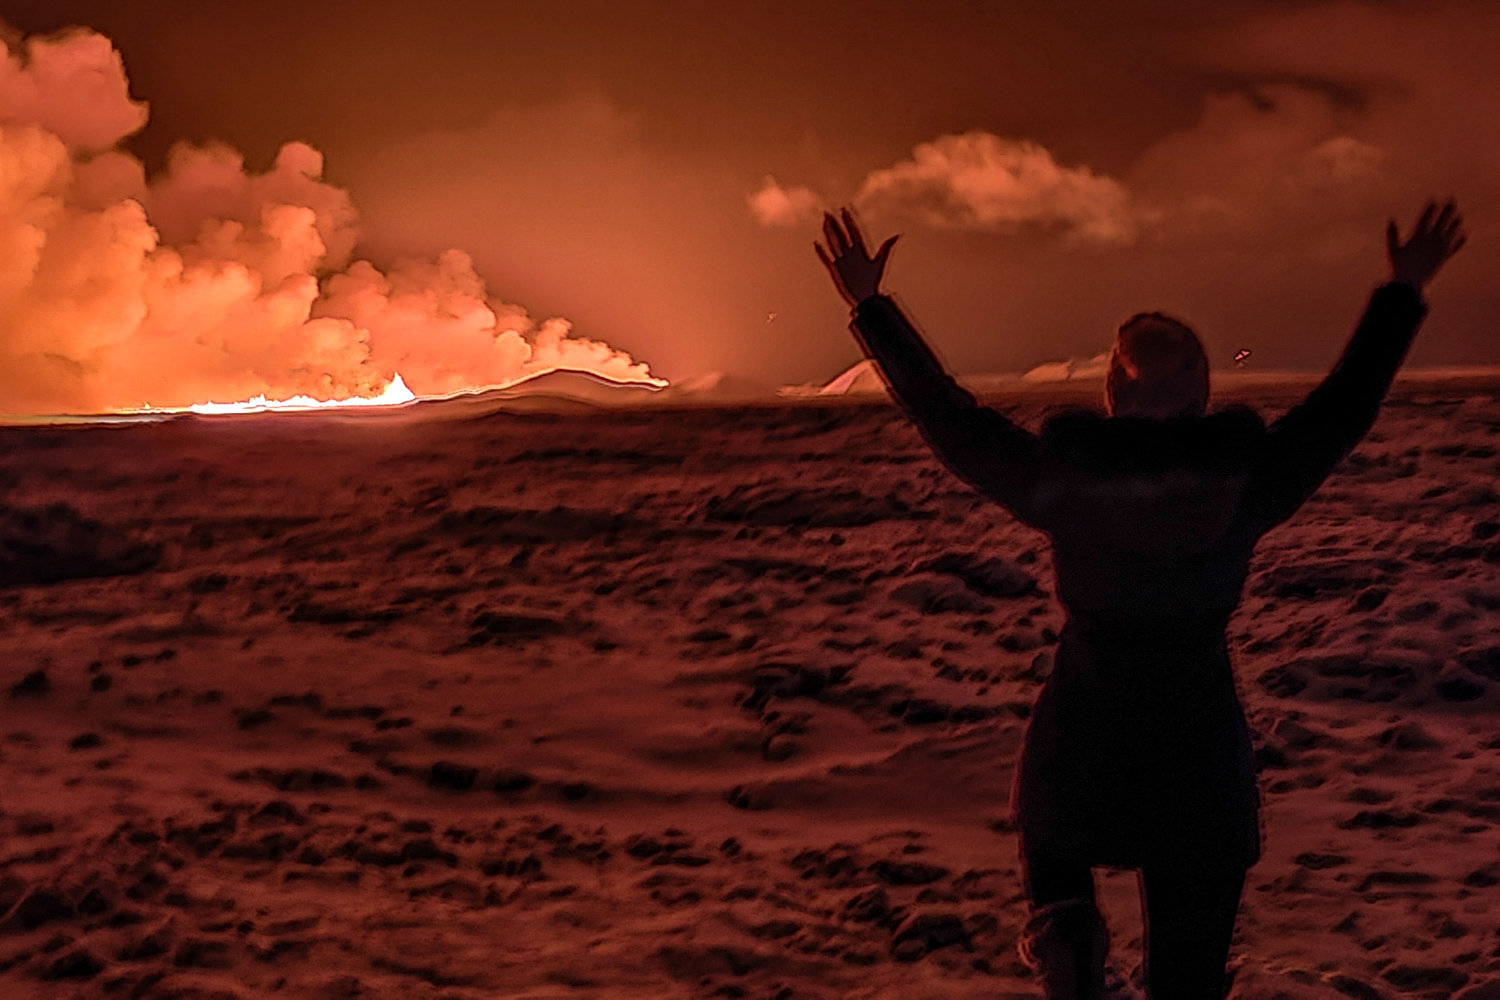 billedserie: vulkanudbrud maler himlen over island orange